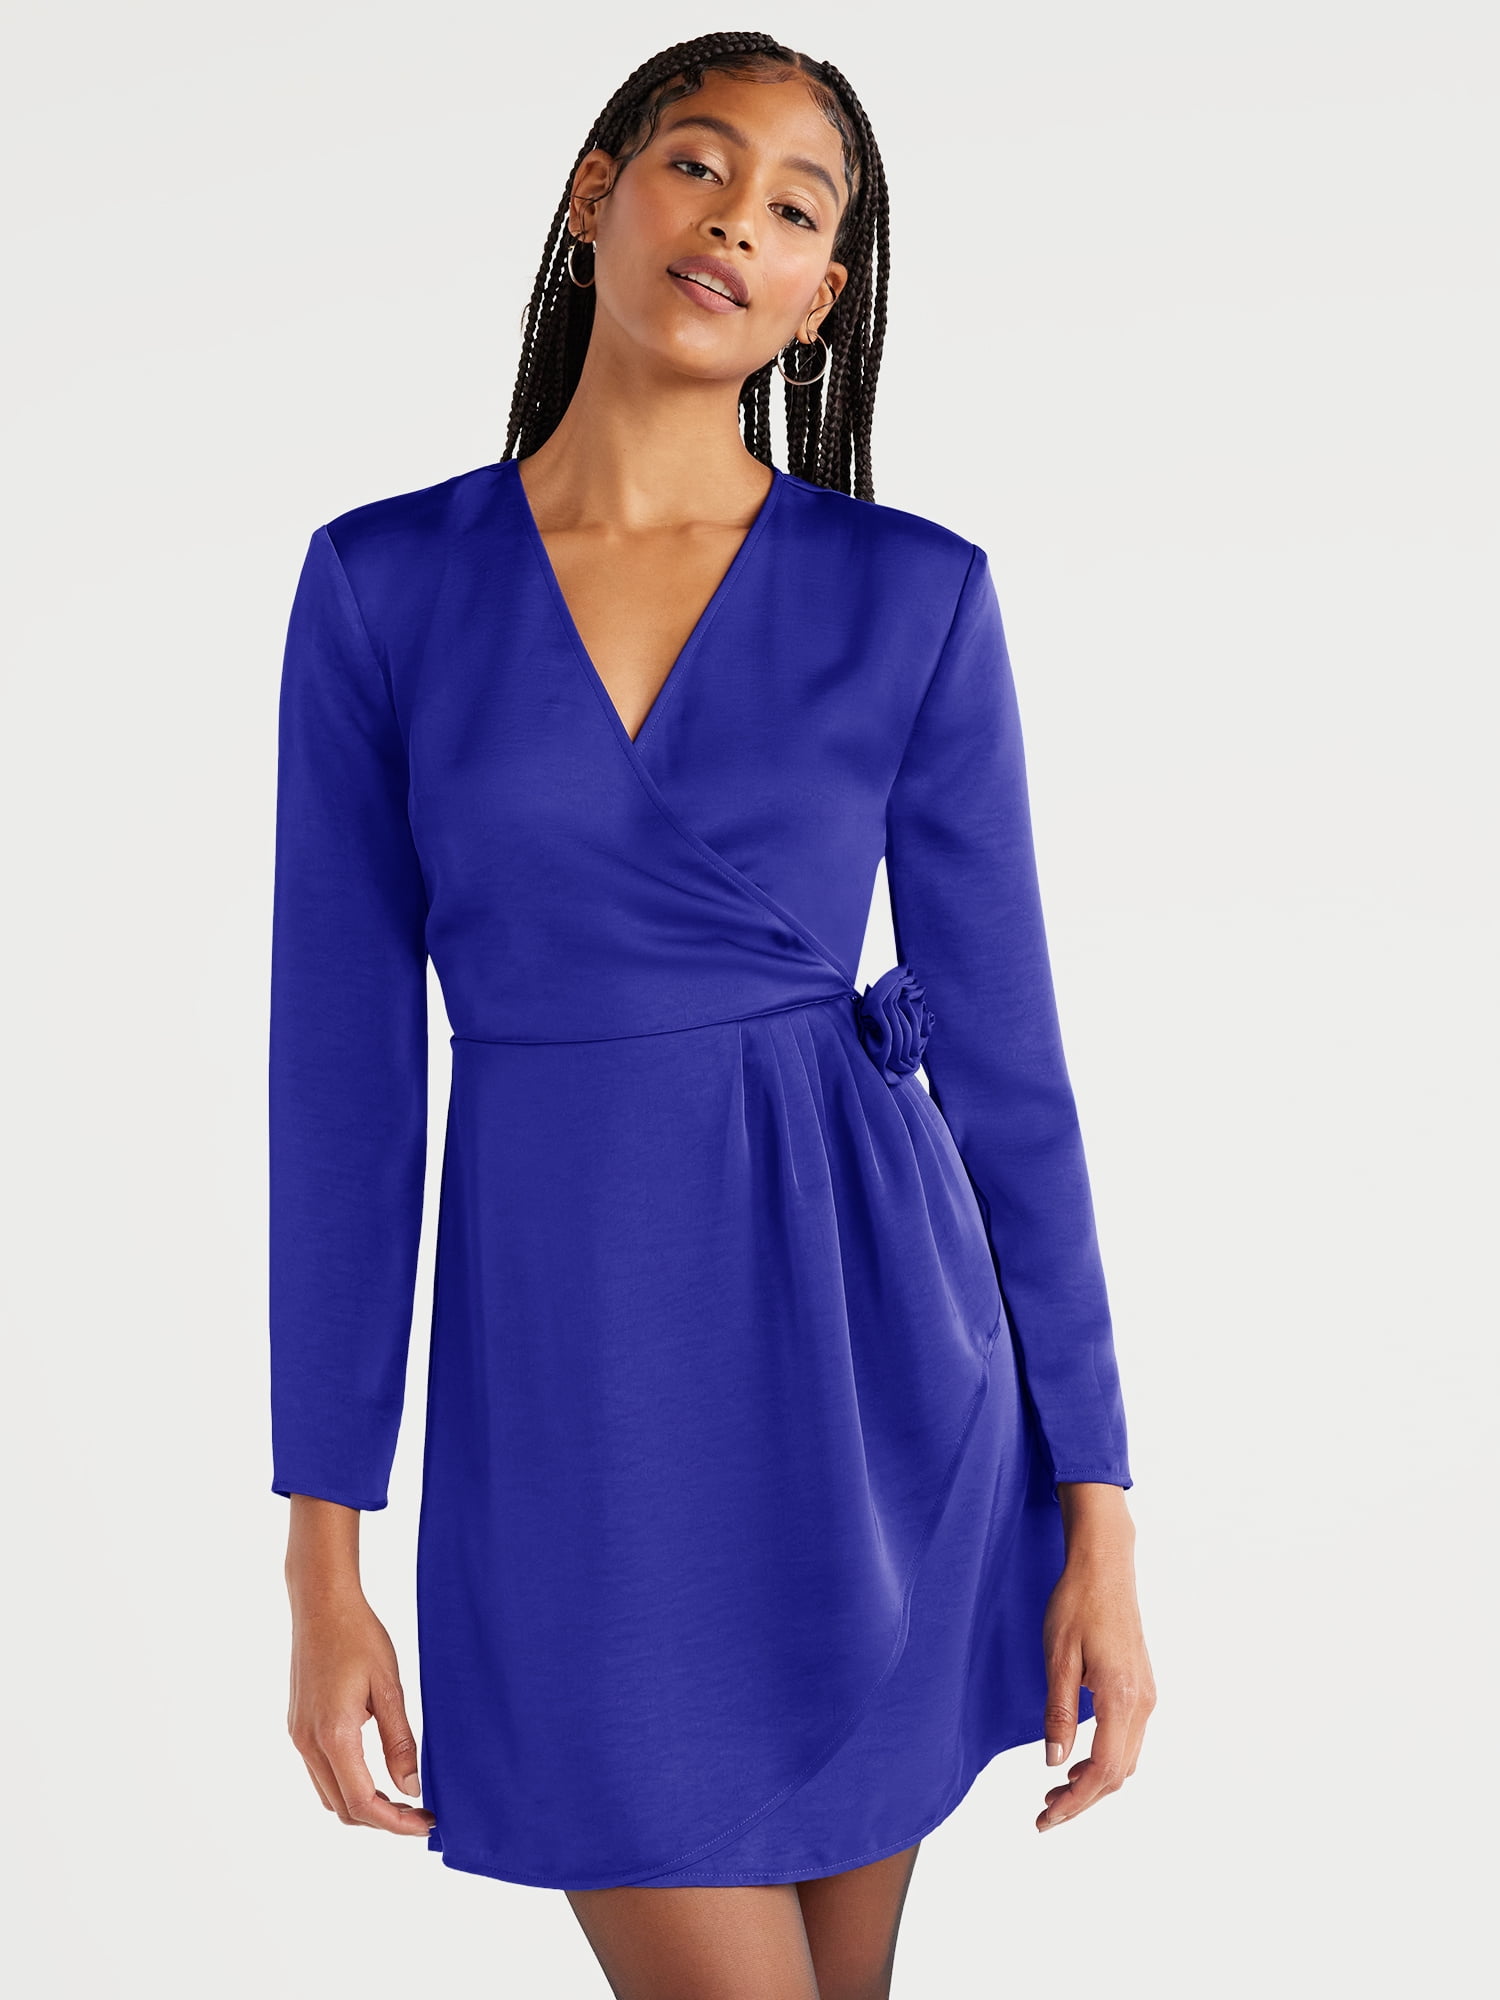 Scoop Women’s Rosette Satin Mini Dress, Sizes XS-XXL - Walmart.com